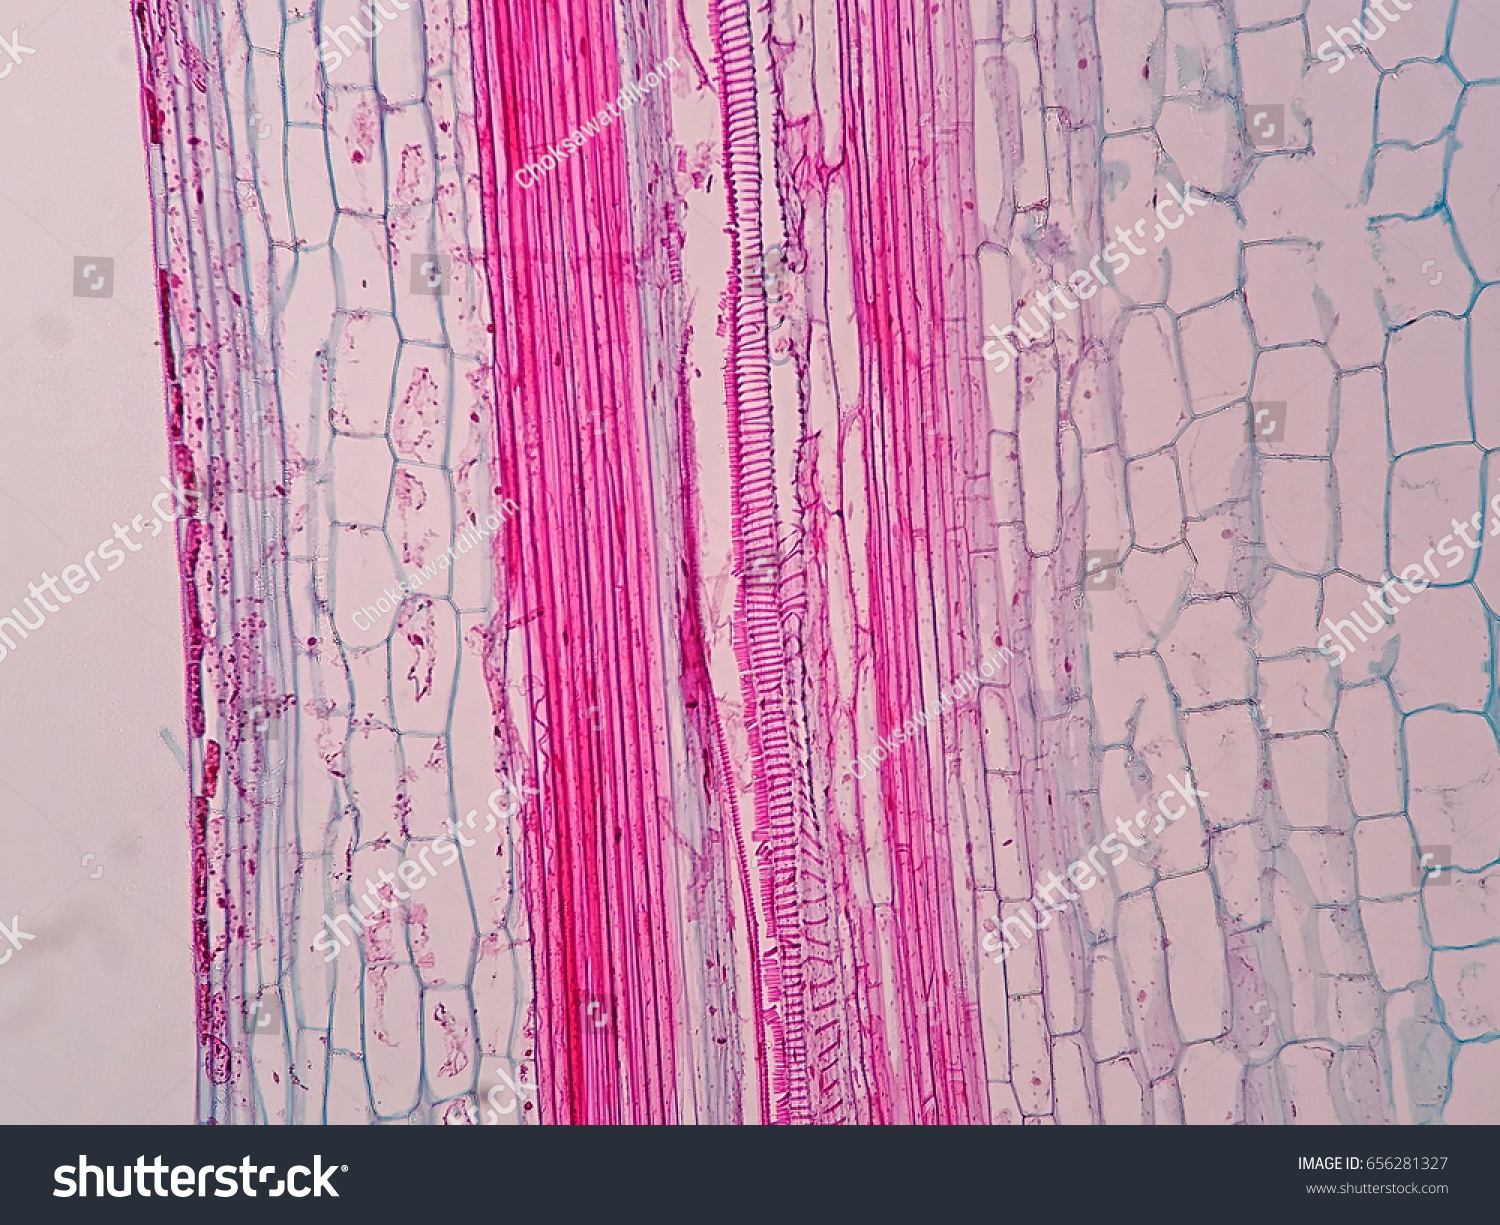 Plant vascular tissue under microscope view. #656281327